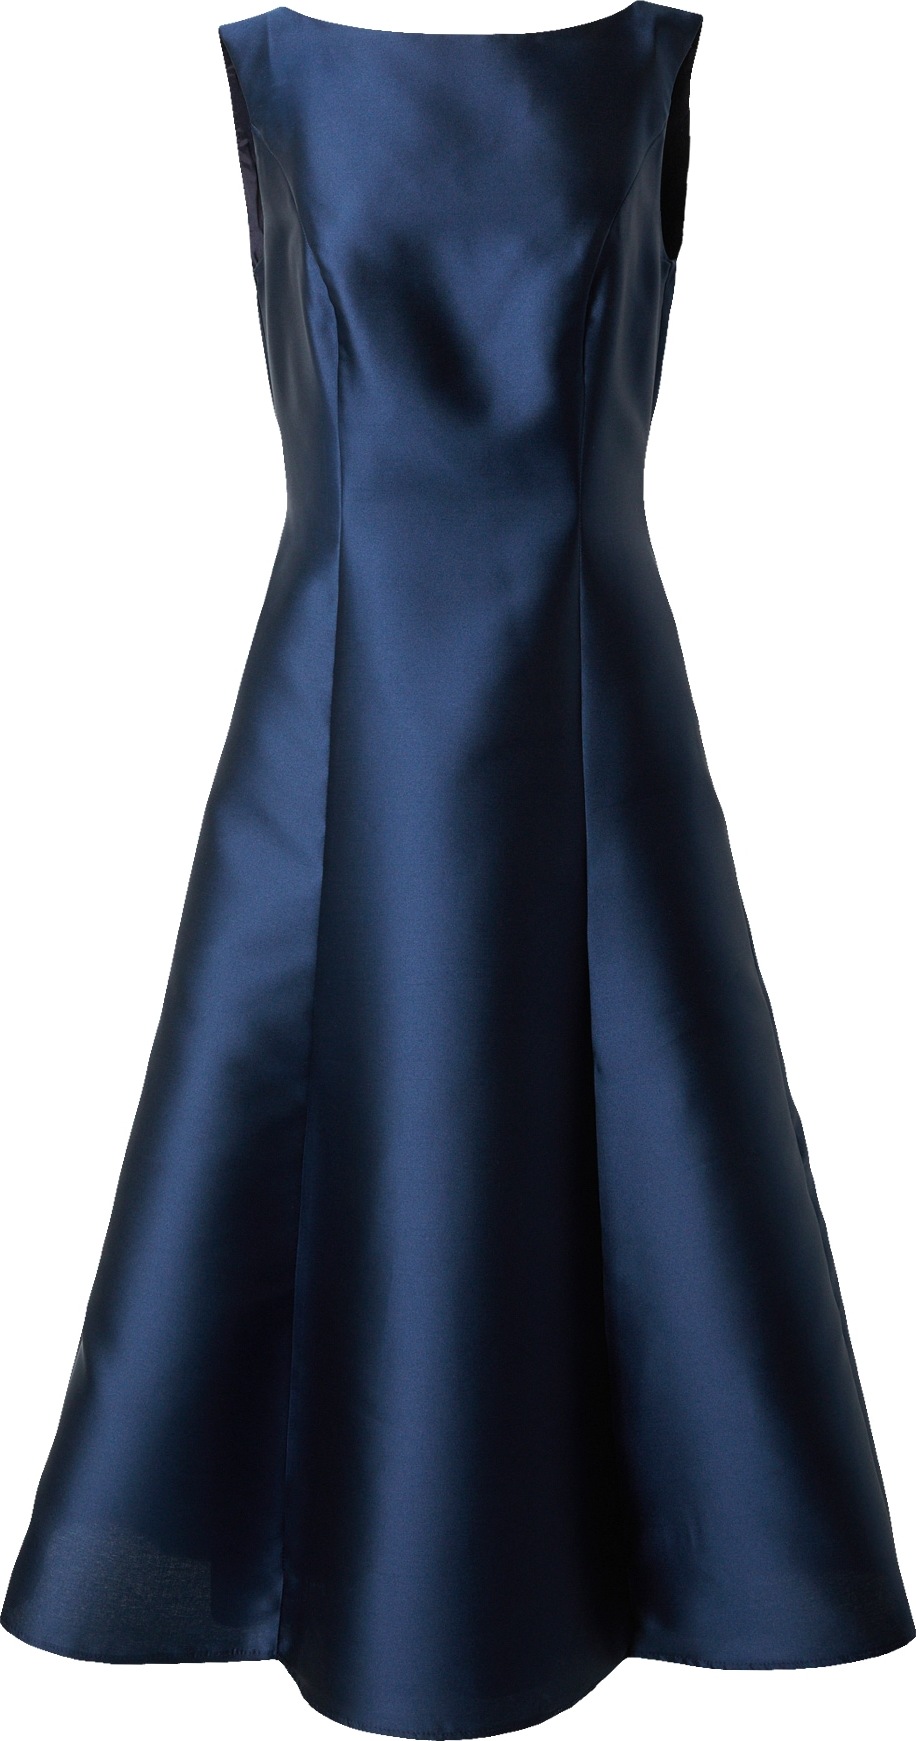 Koktejlové šaty SWING marine modrá